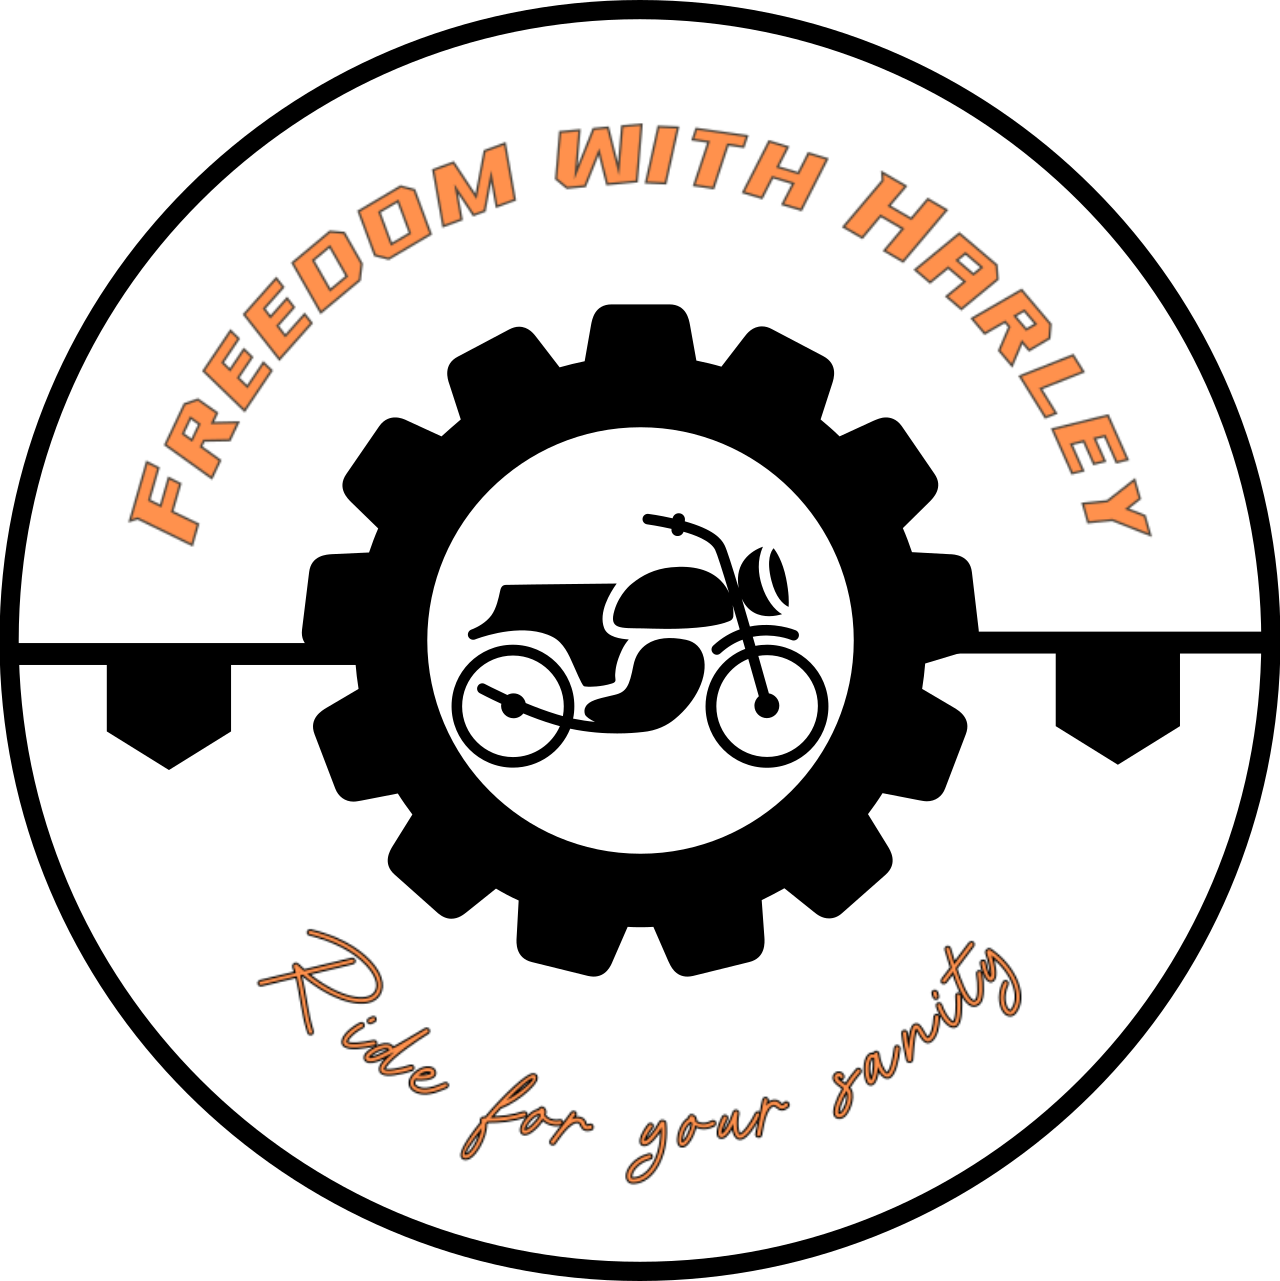 Freedom with Harley's logo